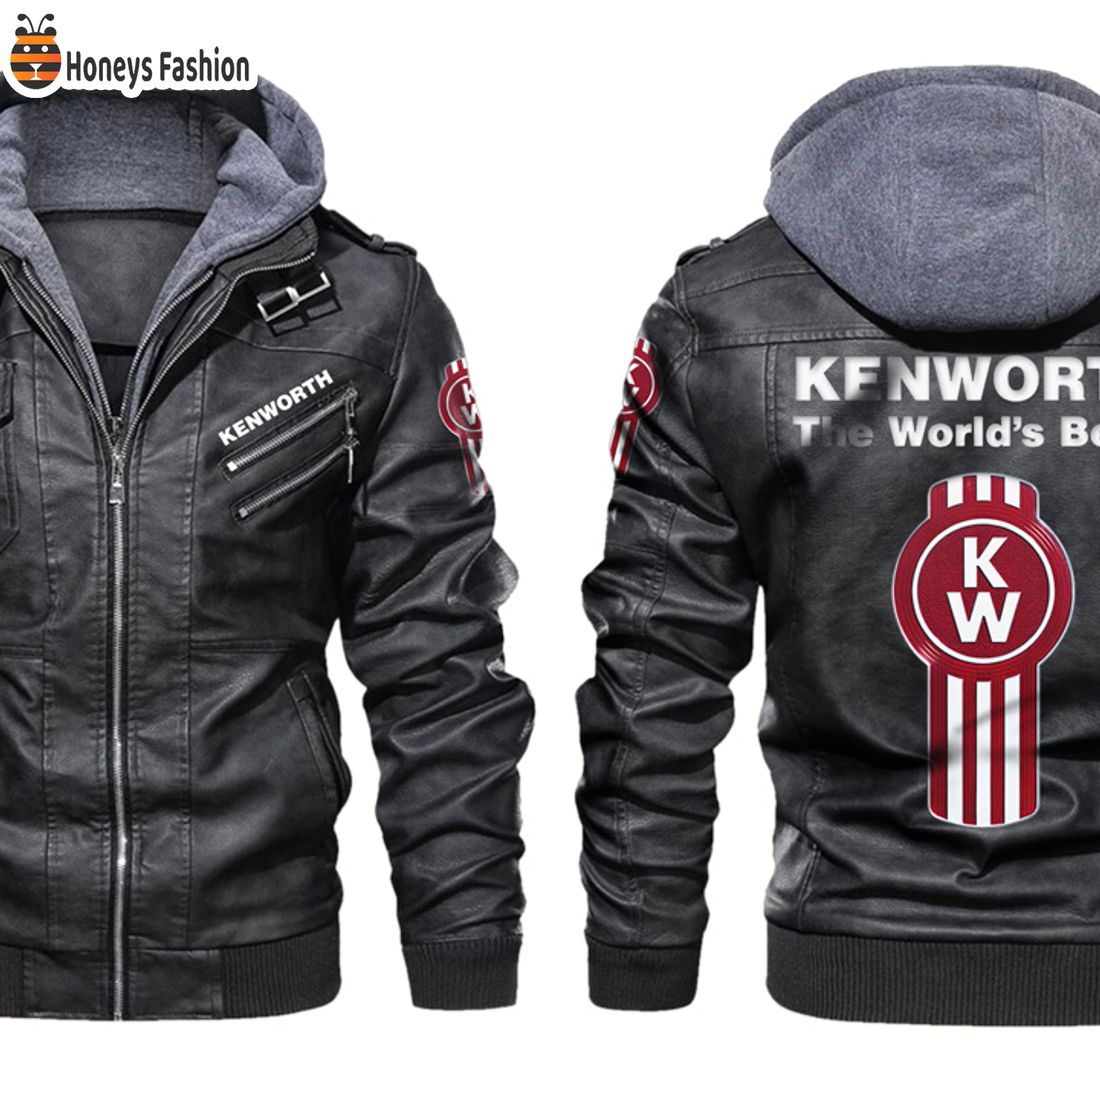 SELLER Kenworth the worlds best leather jacket